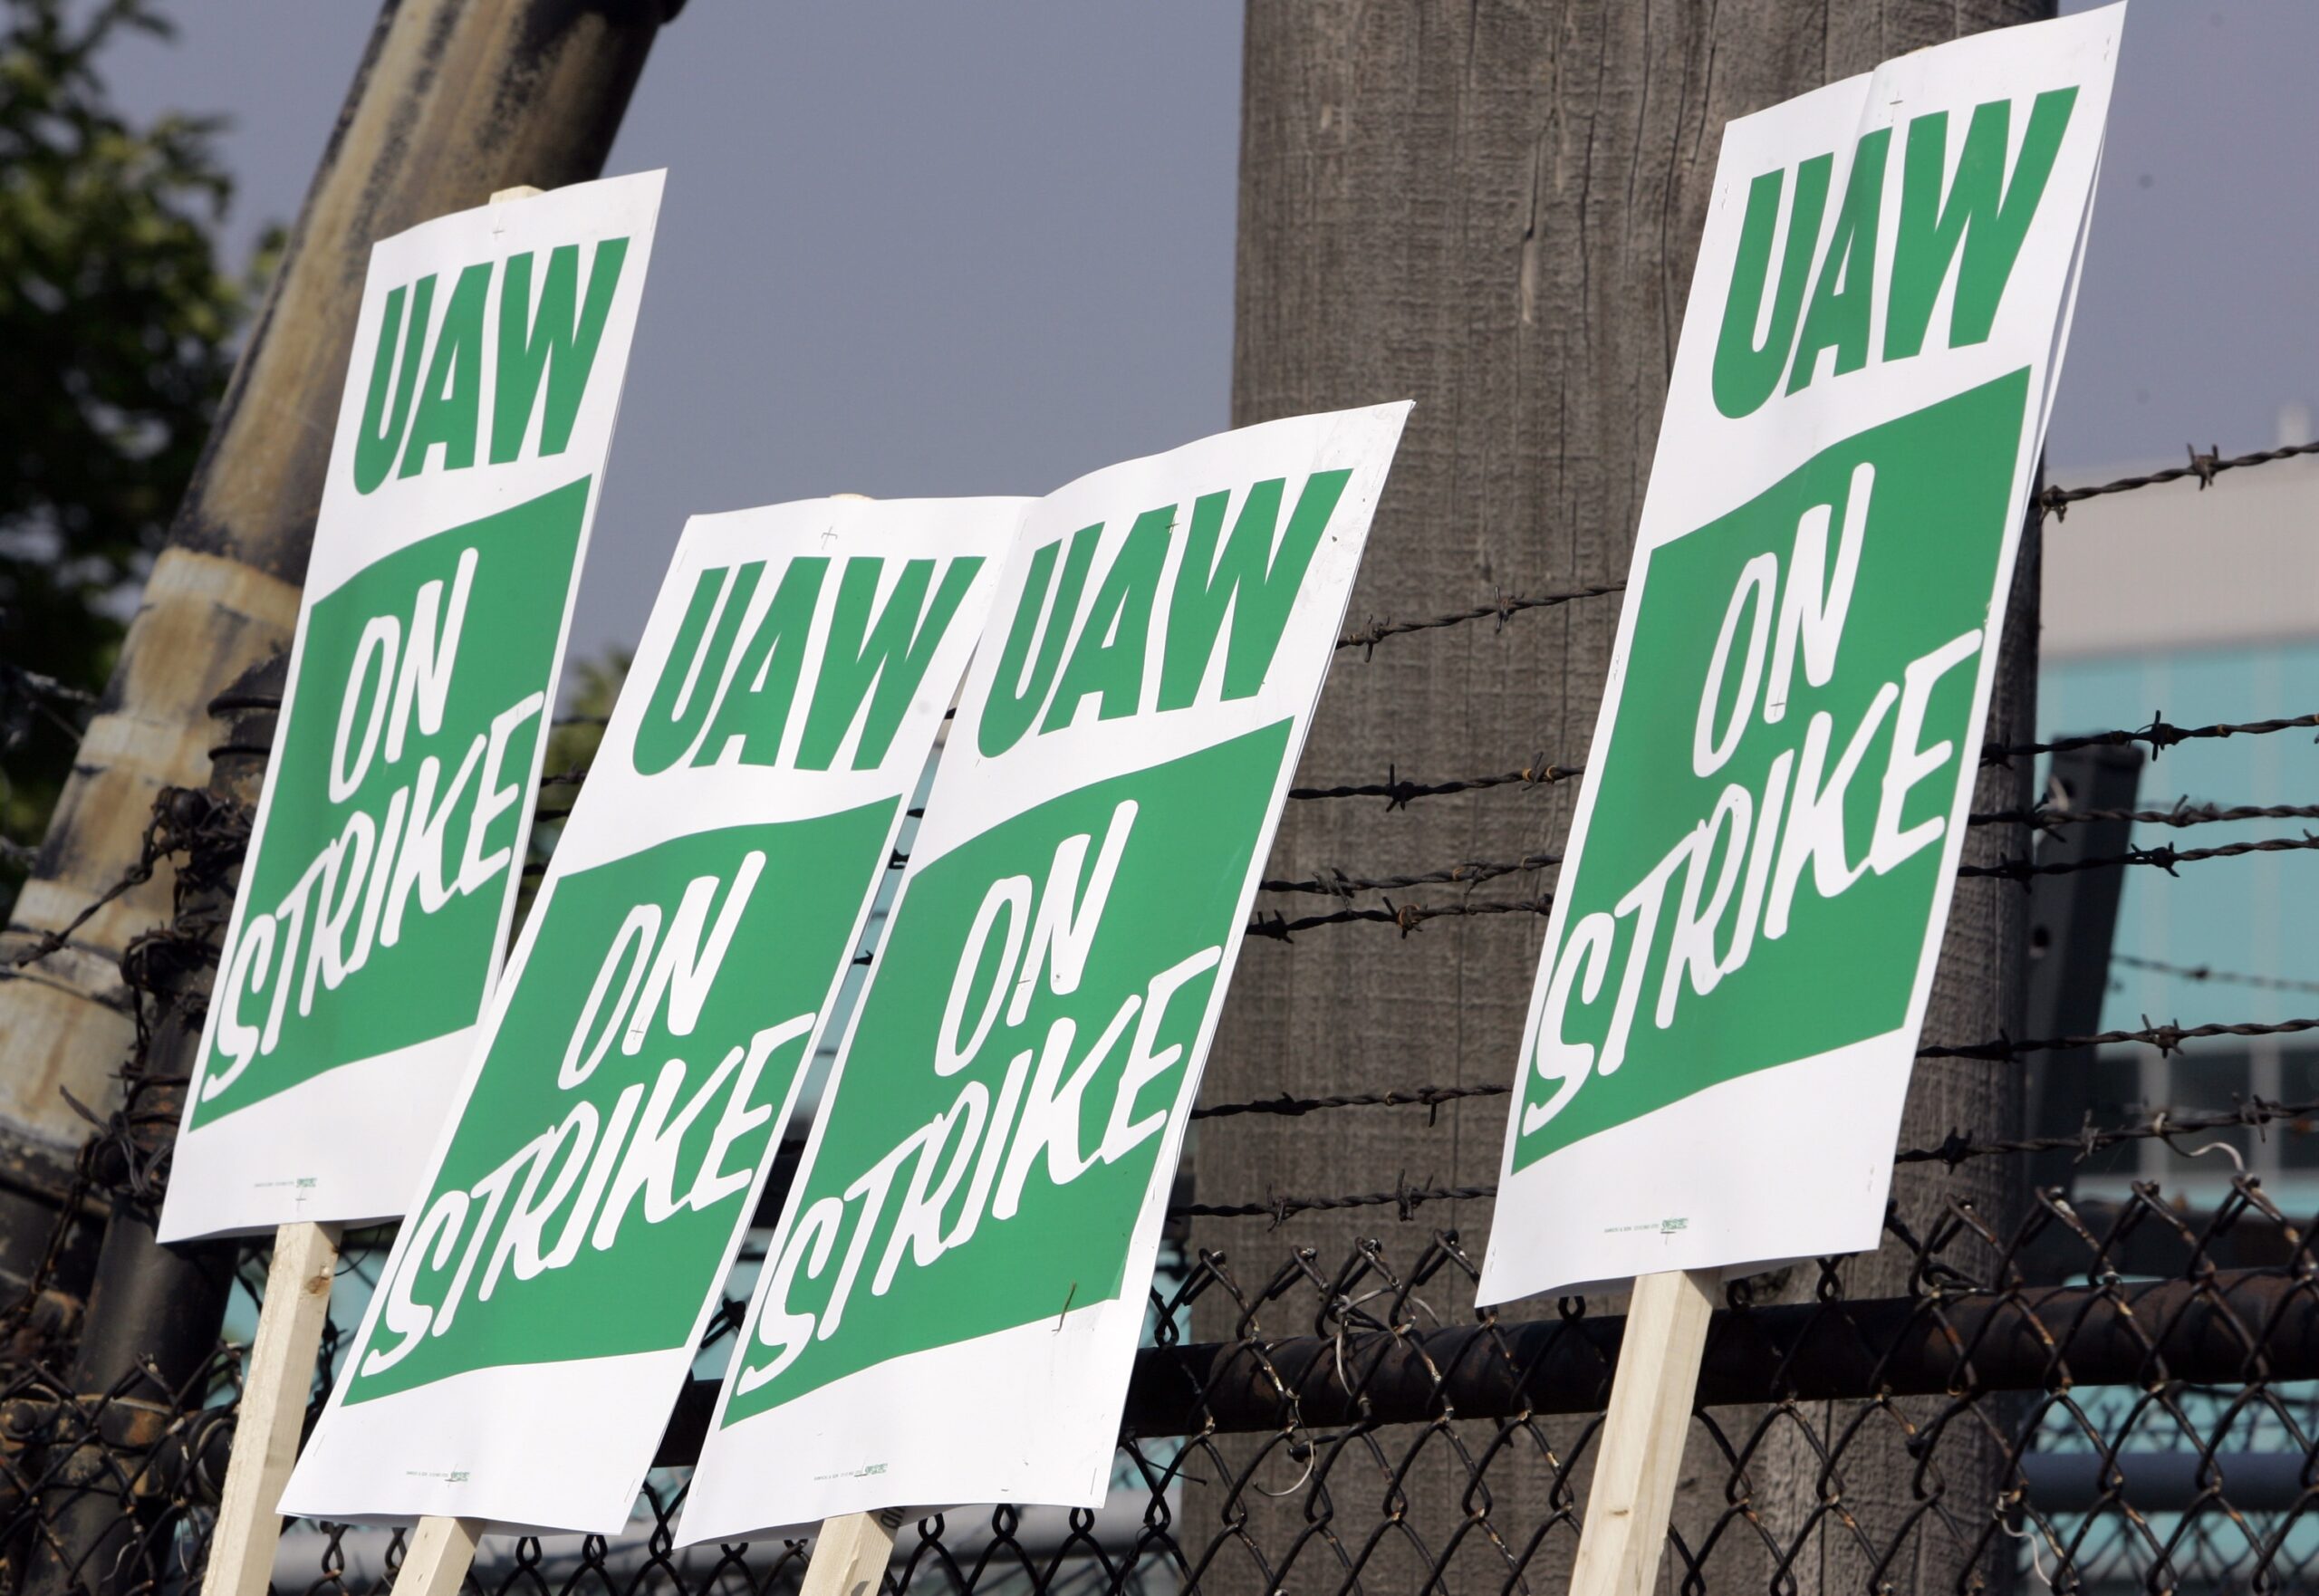 UAW strike signs